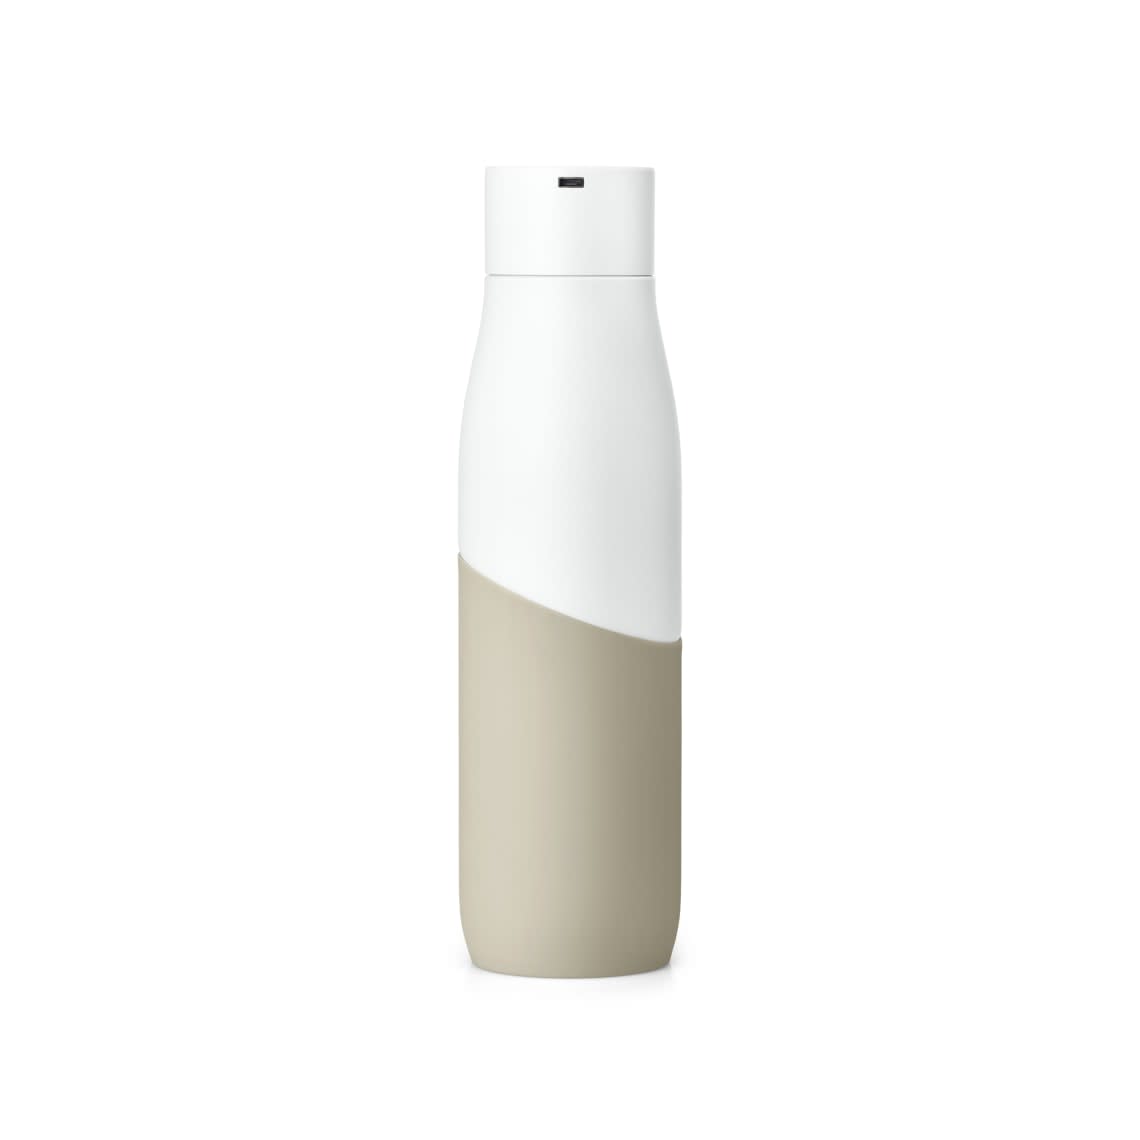 LARQ Bottle Movement PureVis™ in White Dune Color 4